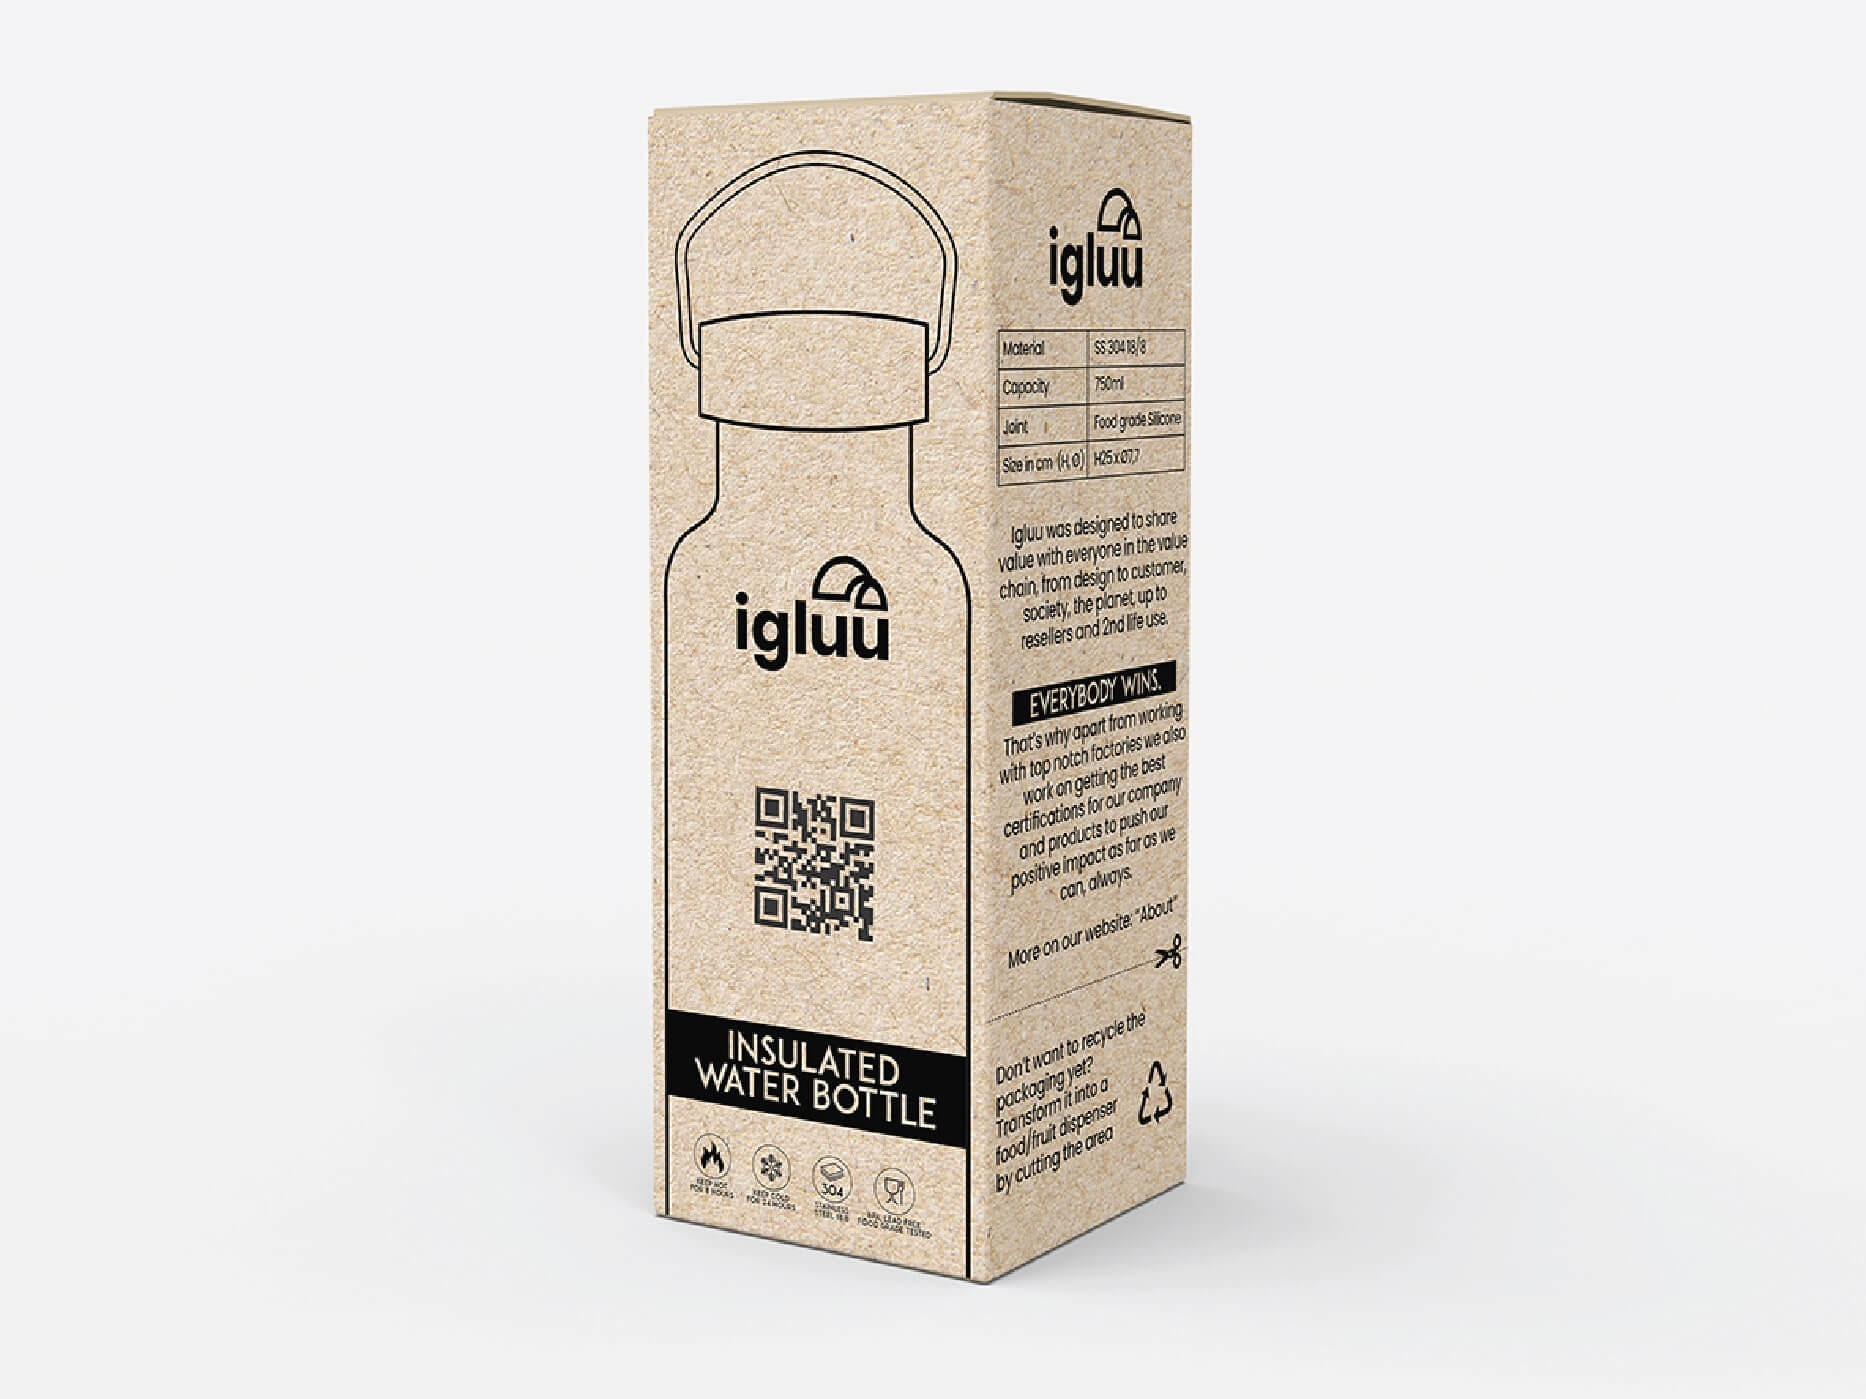 Igluu Insulated Water Bottle